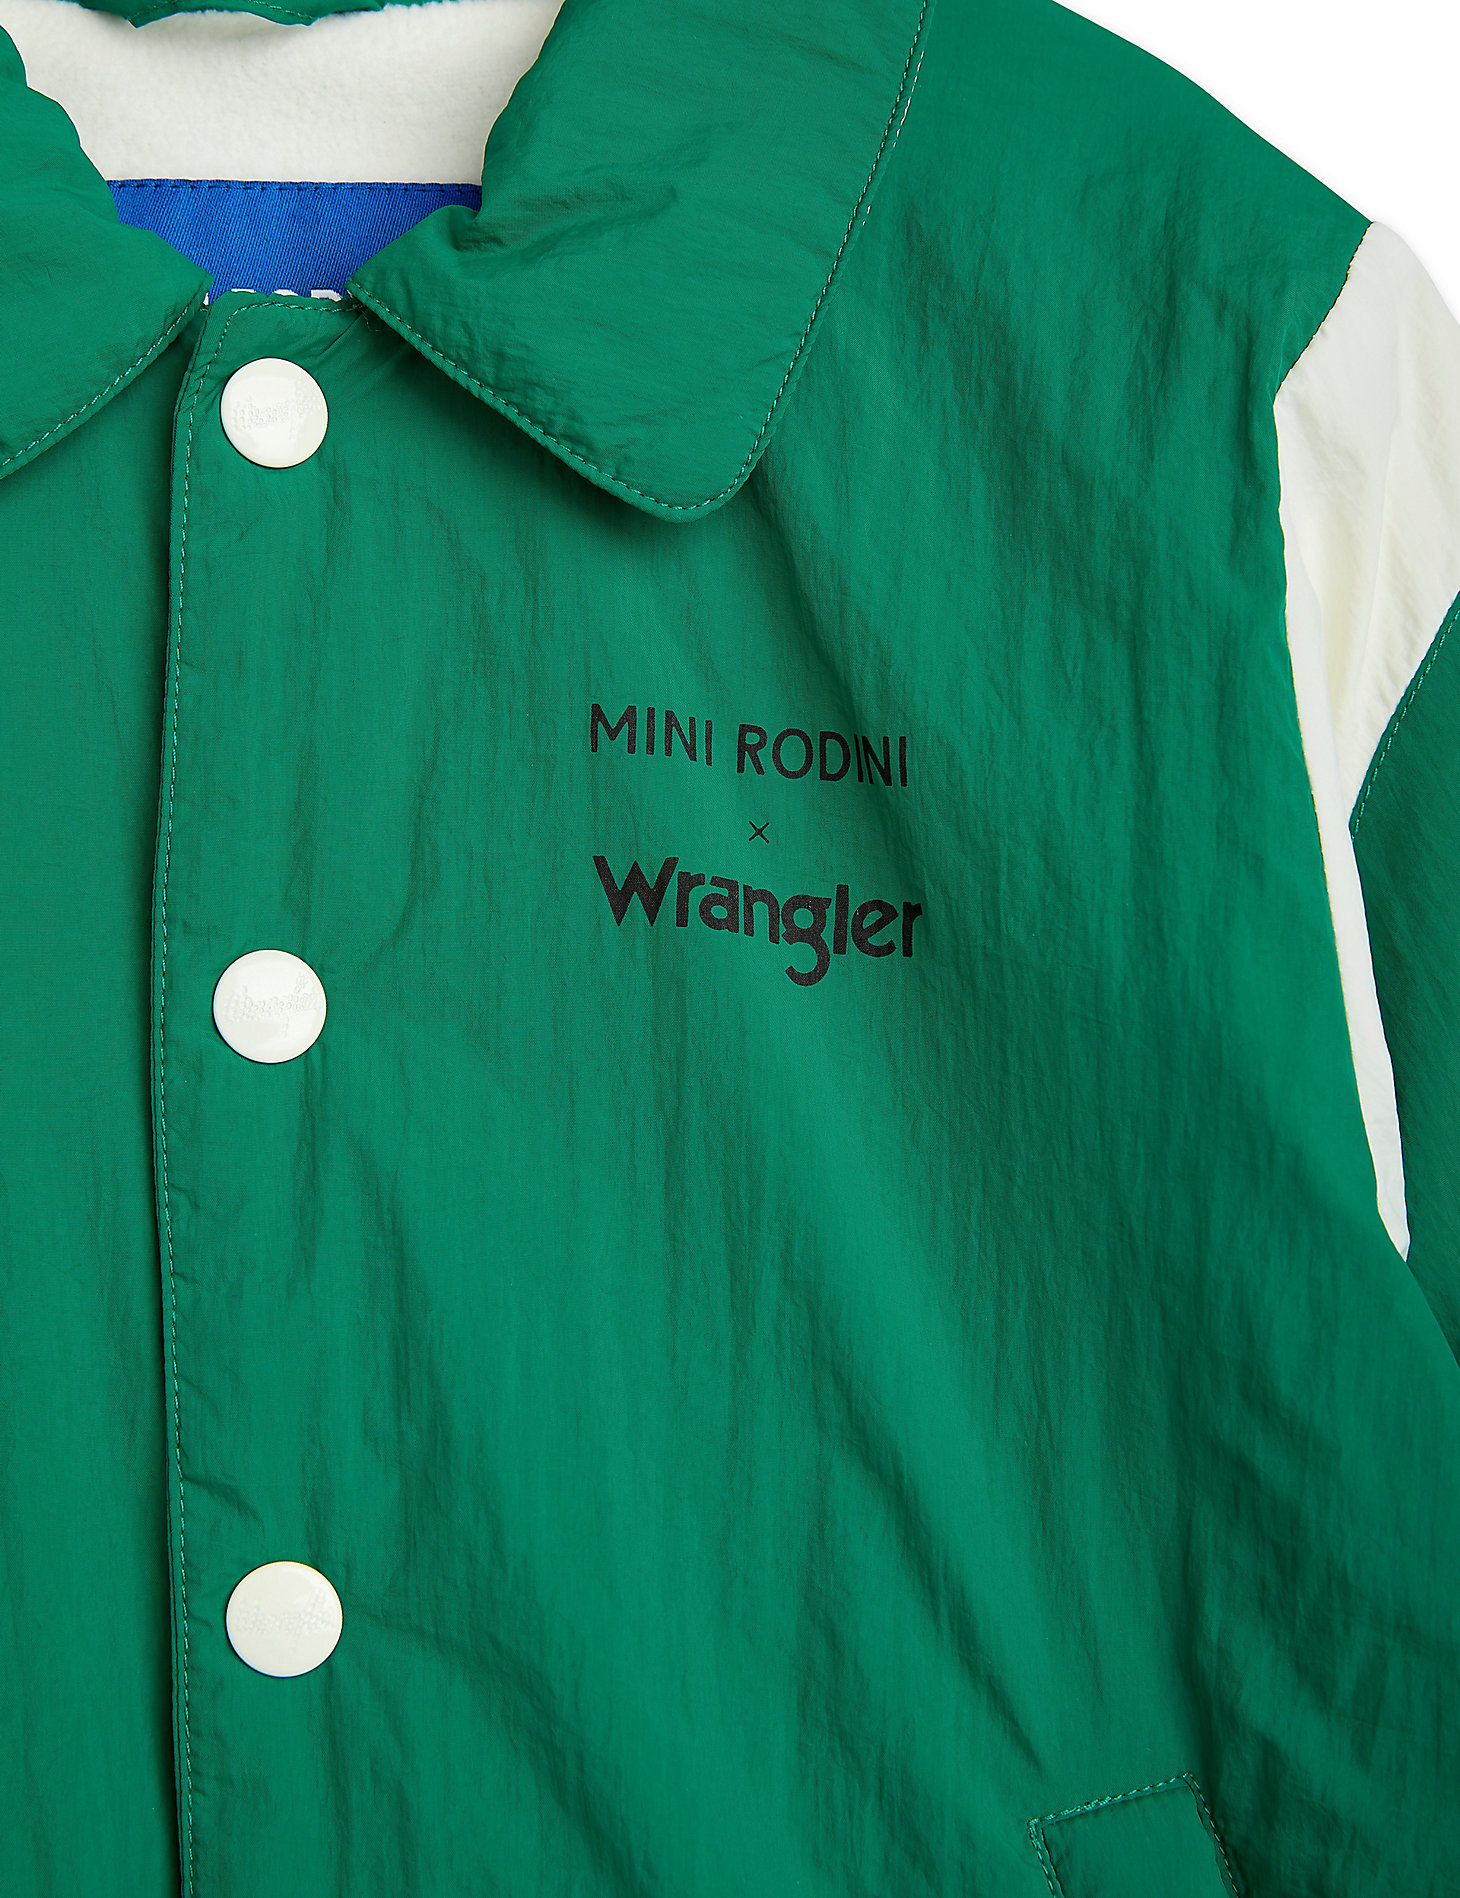 Mini Rodini x Wrangler Peace Dove Lined Coach Jacket in Green alternative view 2